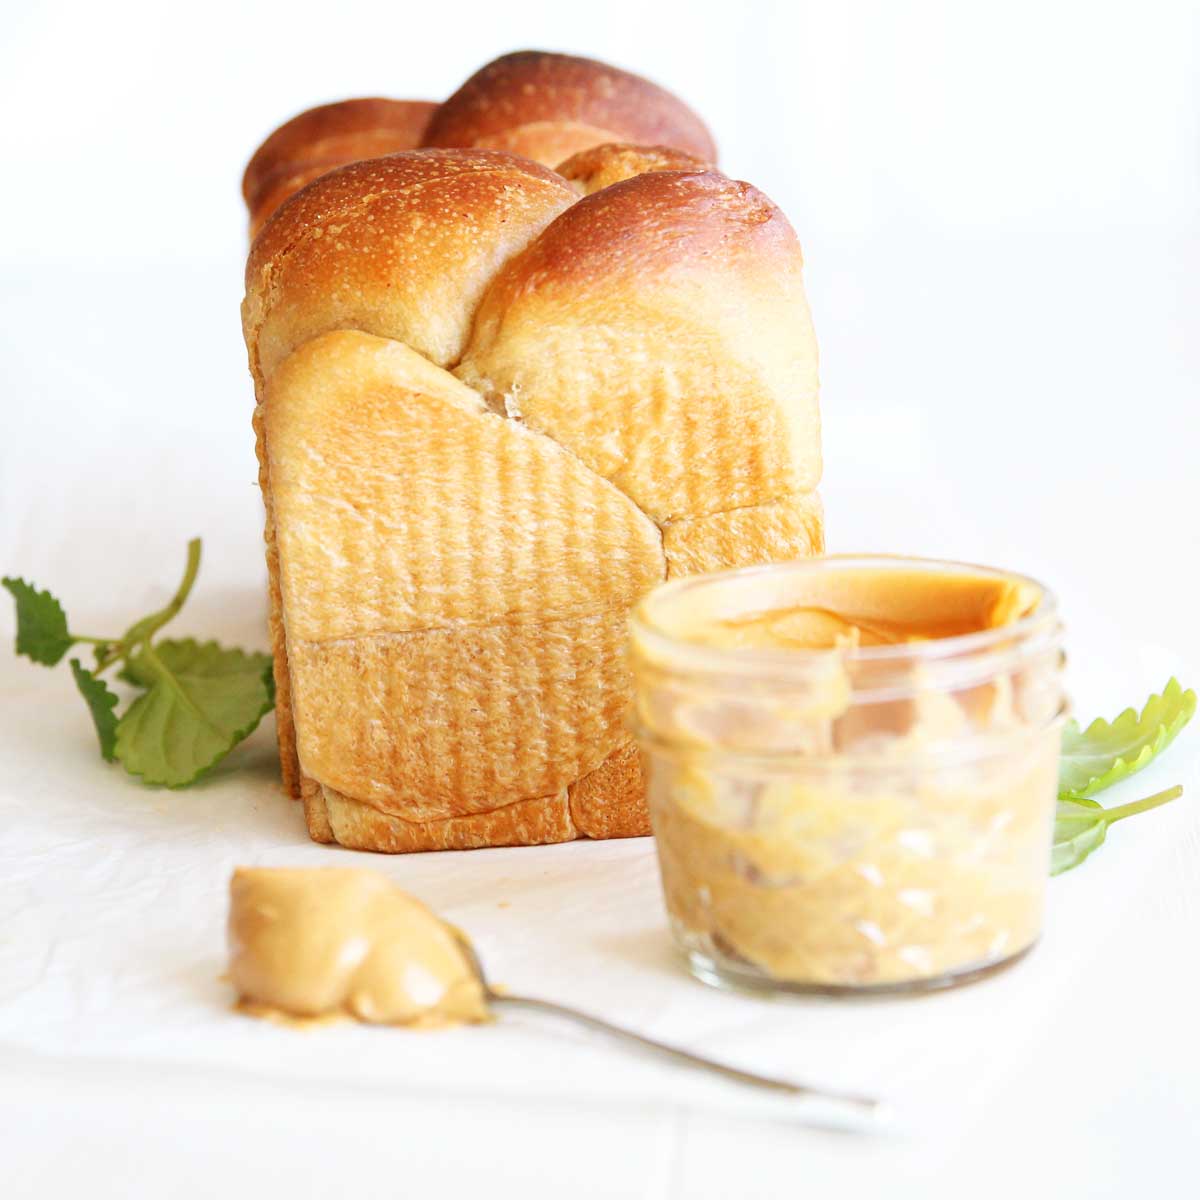 Peanut Butter Yeast Bread (A Healthier Vegan "Brioche" Recipe) - Peanut Butter Easter Eggs